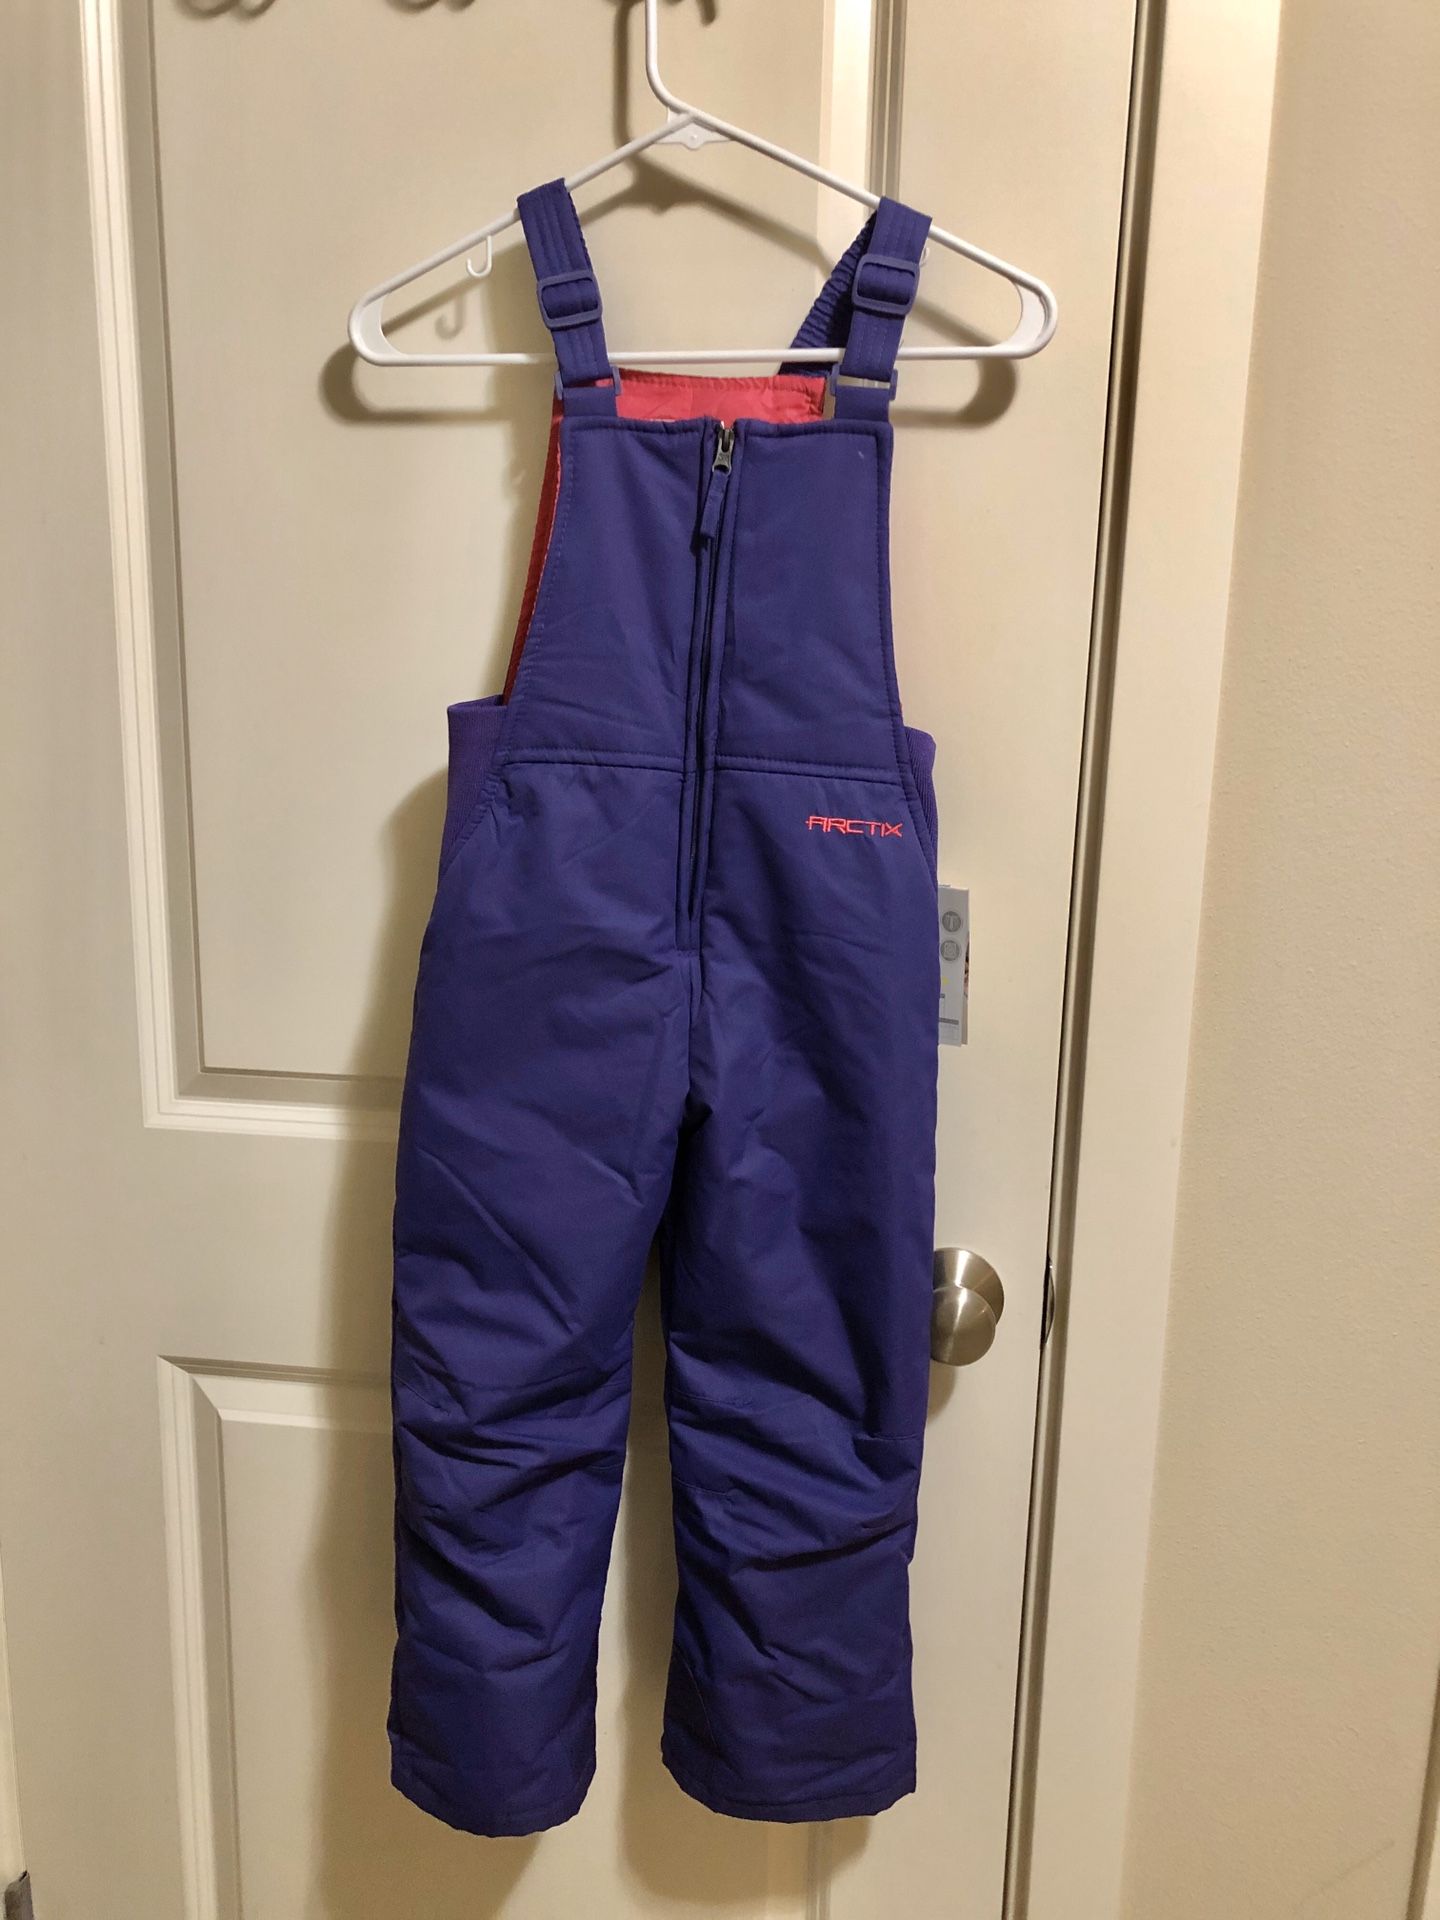 Arctix Snow Bib Overalls Purple Toddler size 5T NWT